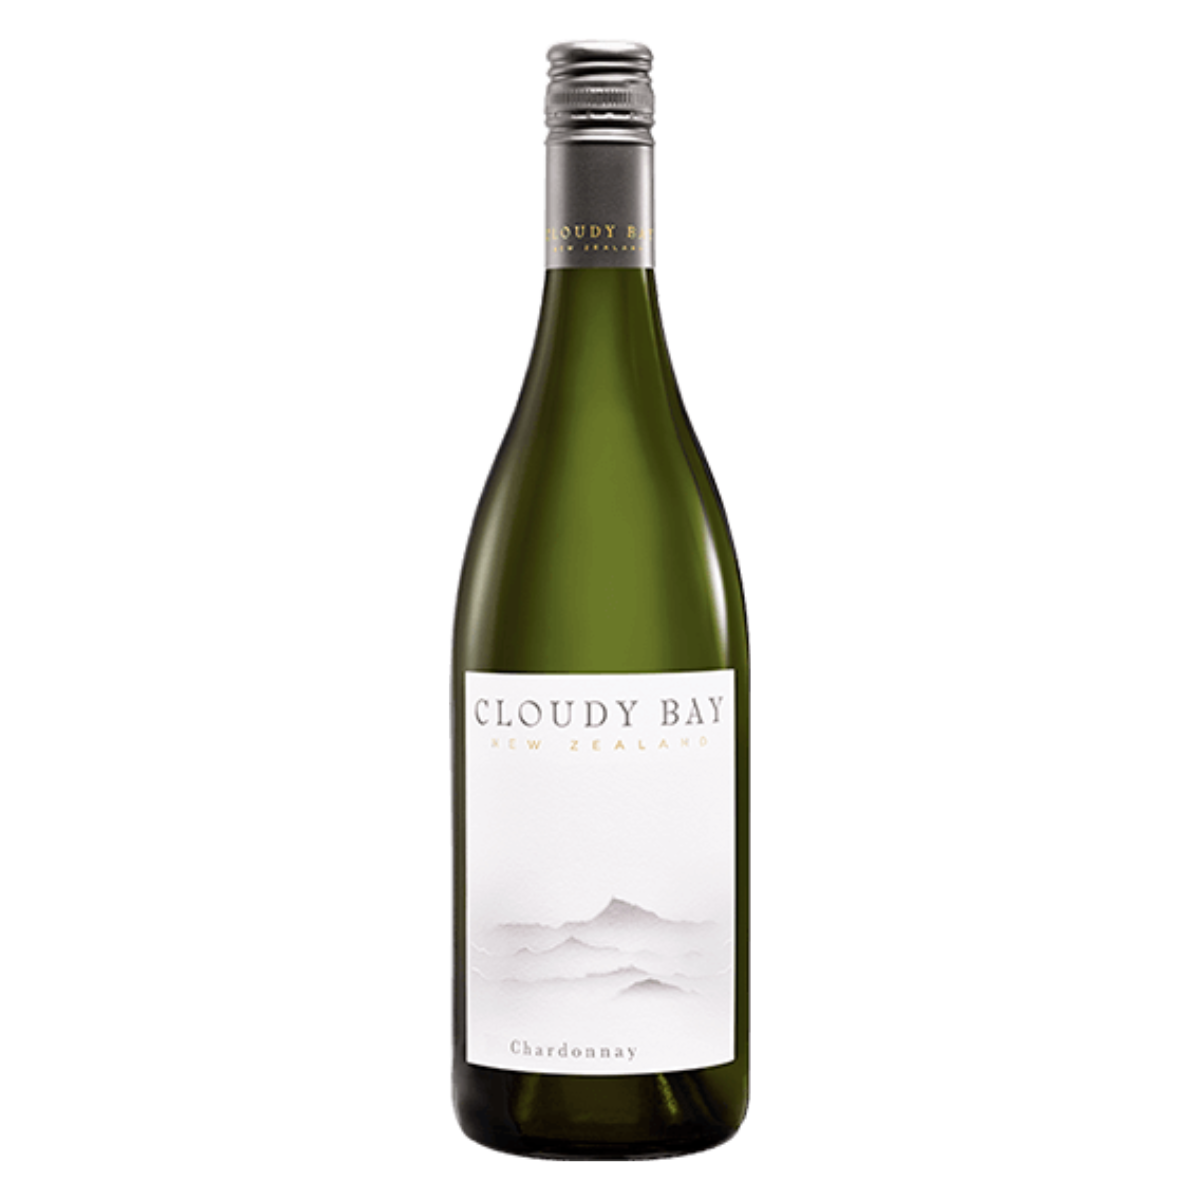 Cloudy Bay Chardonnay 2020 雲霧之灣酒莊霞多麗白酒